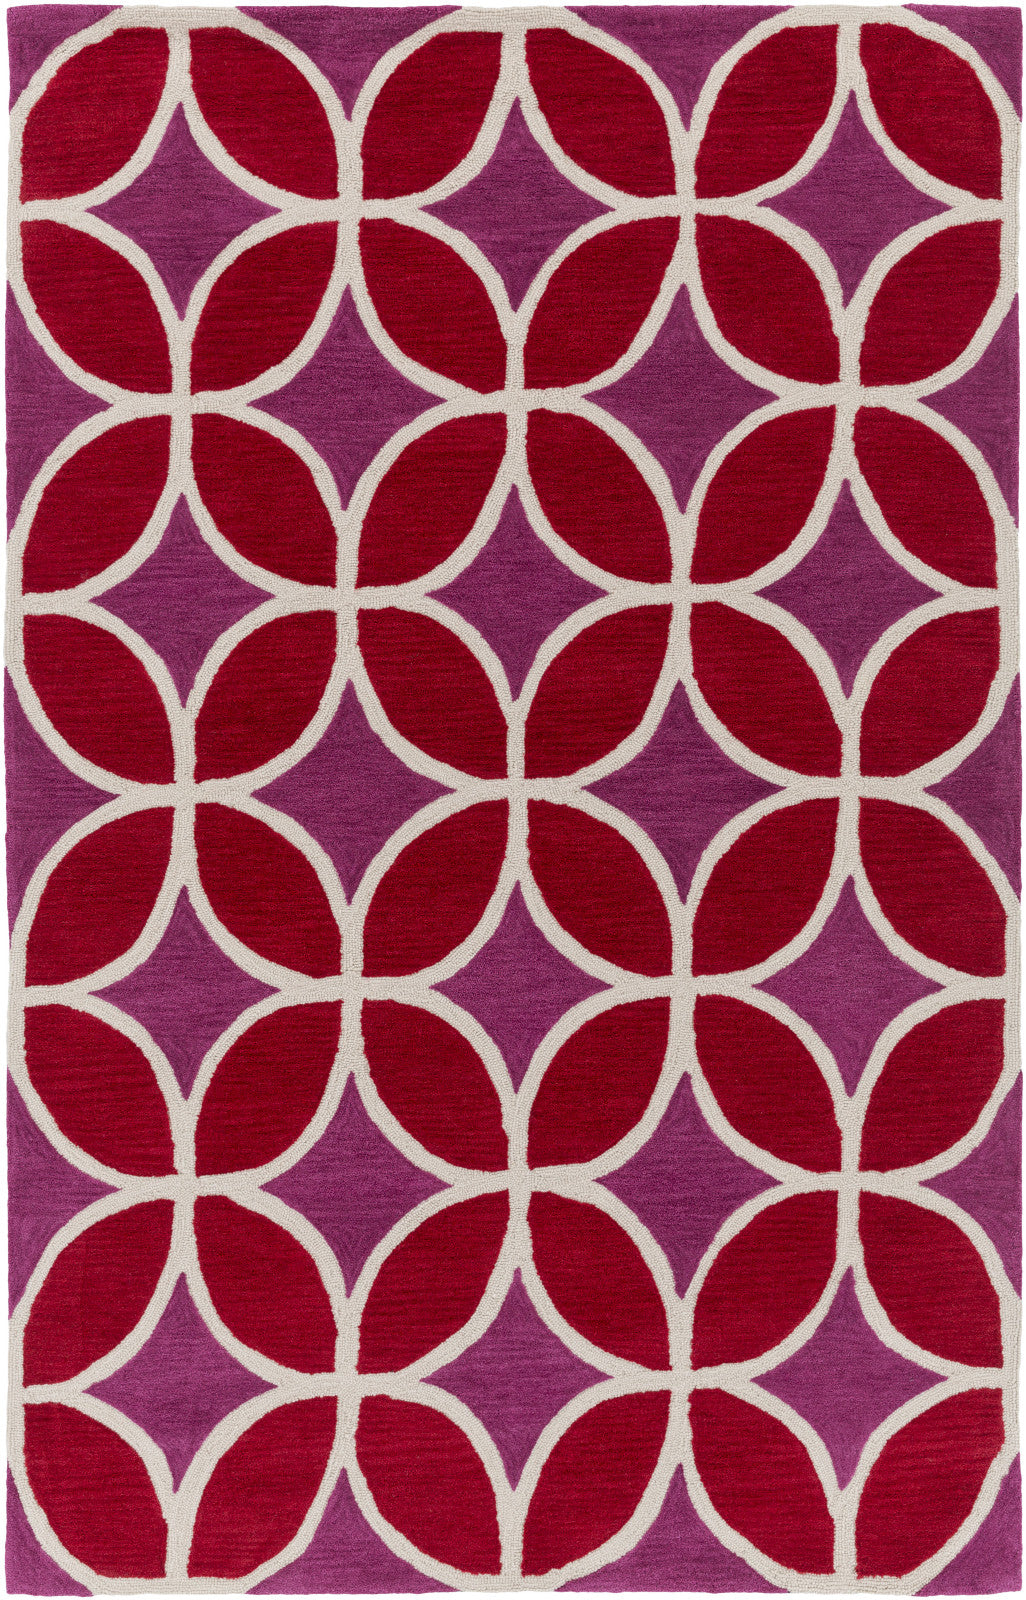 Artistic Weavers Holden Mackenzie Crimson Red/Raspberry Area Rug main image